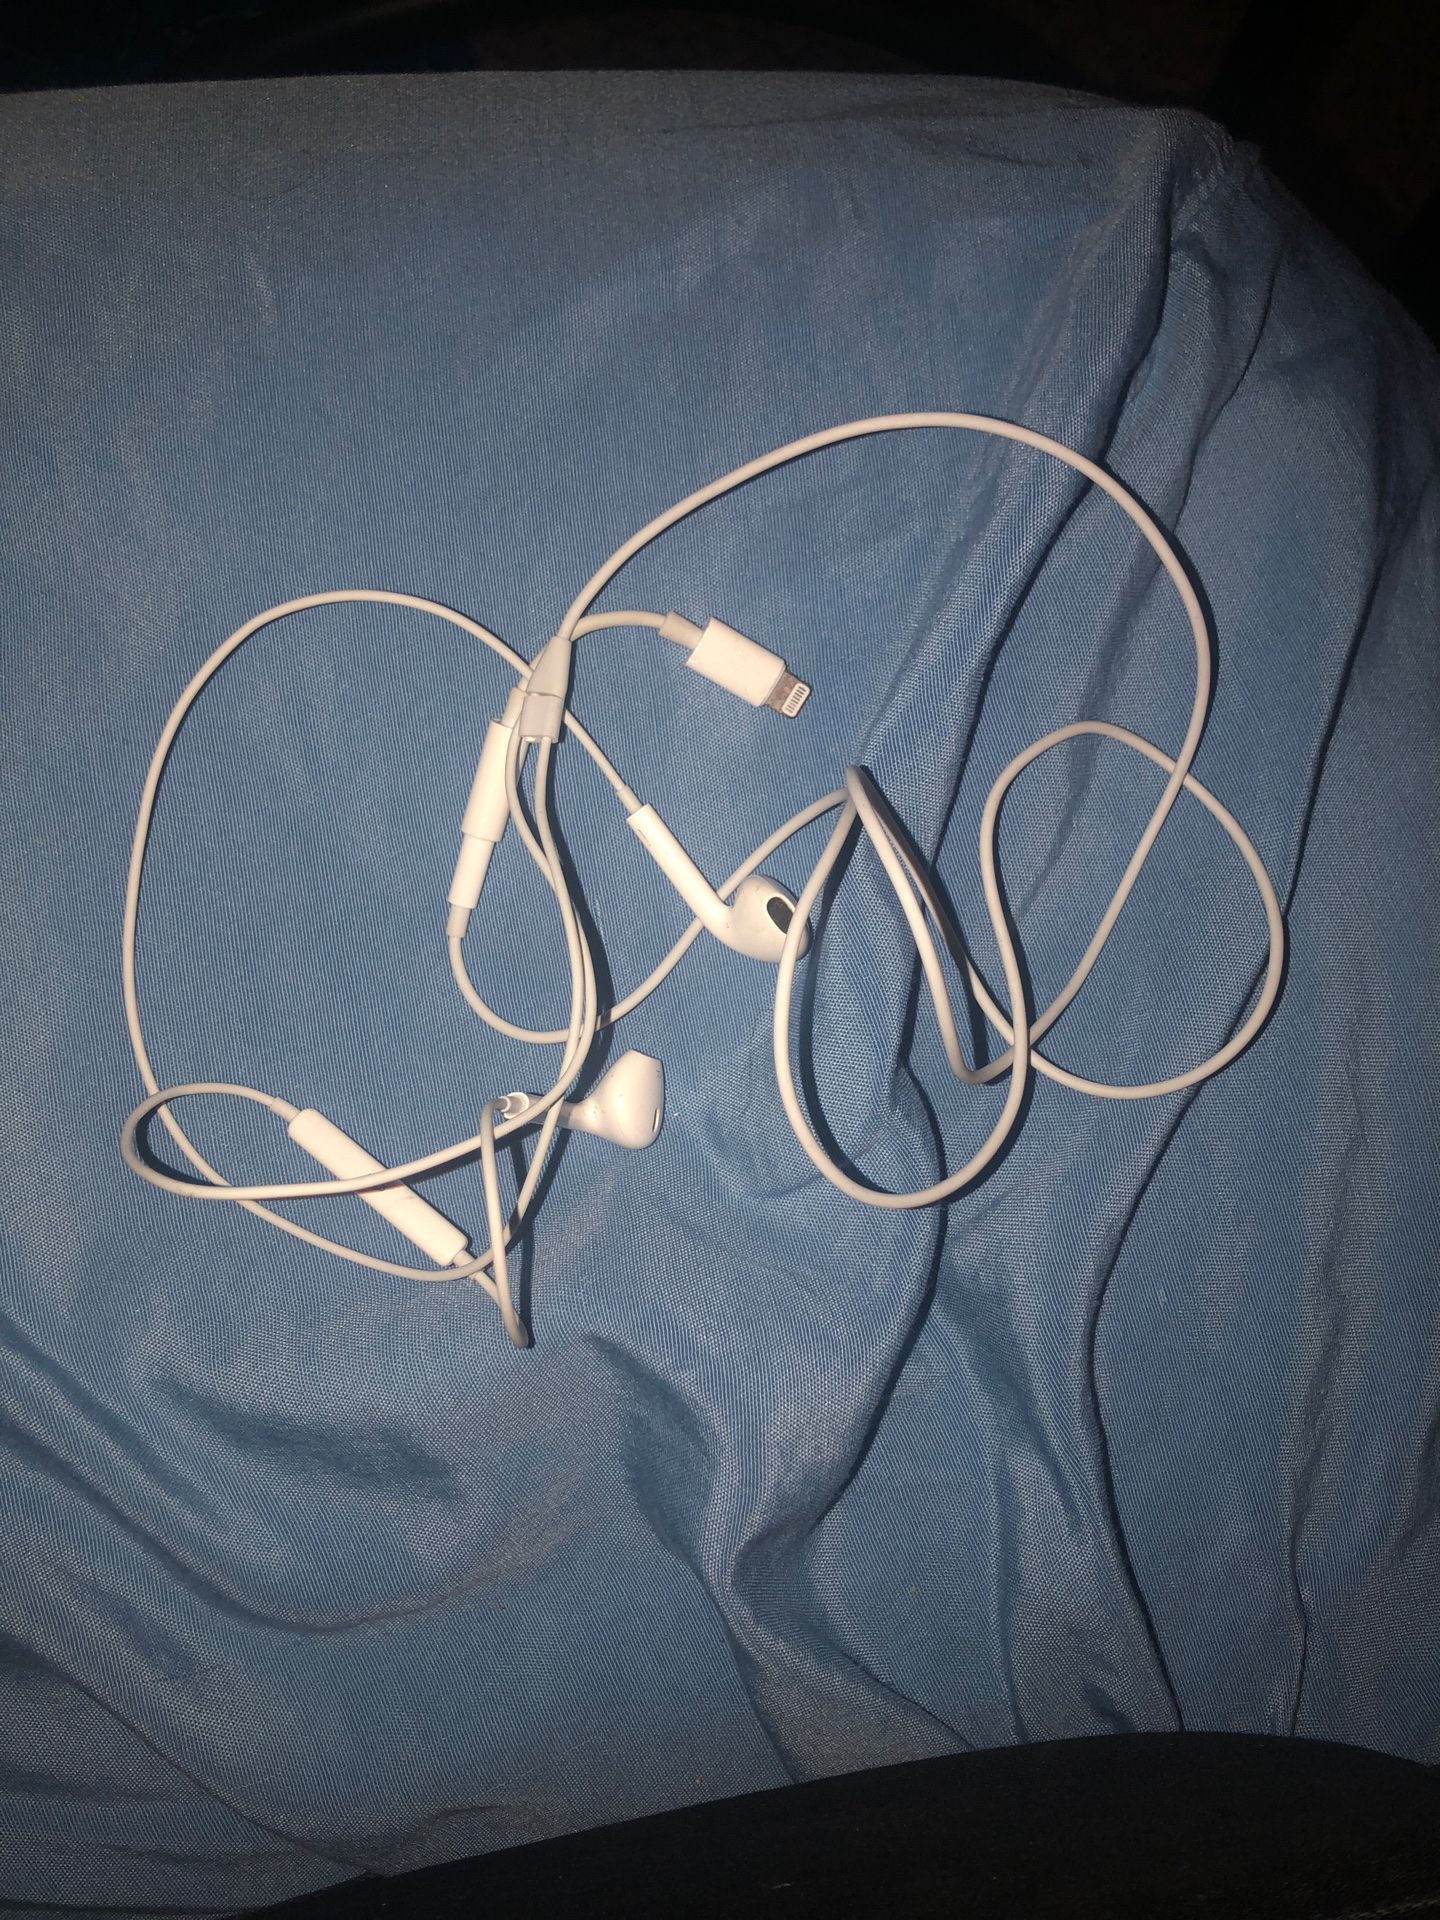 Apple headphones with adapter